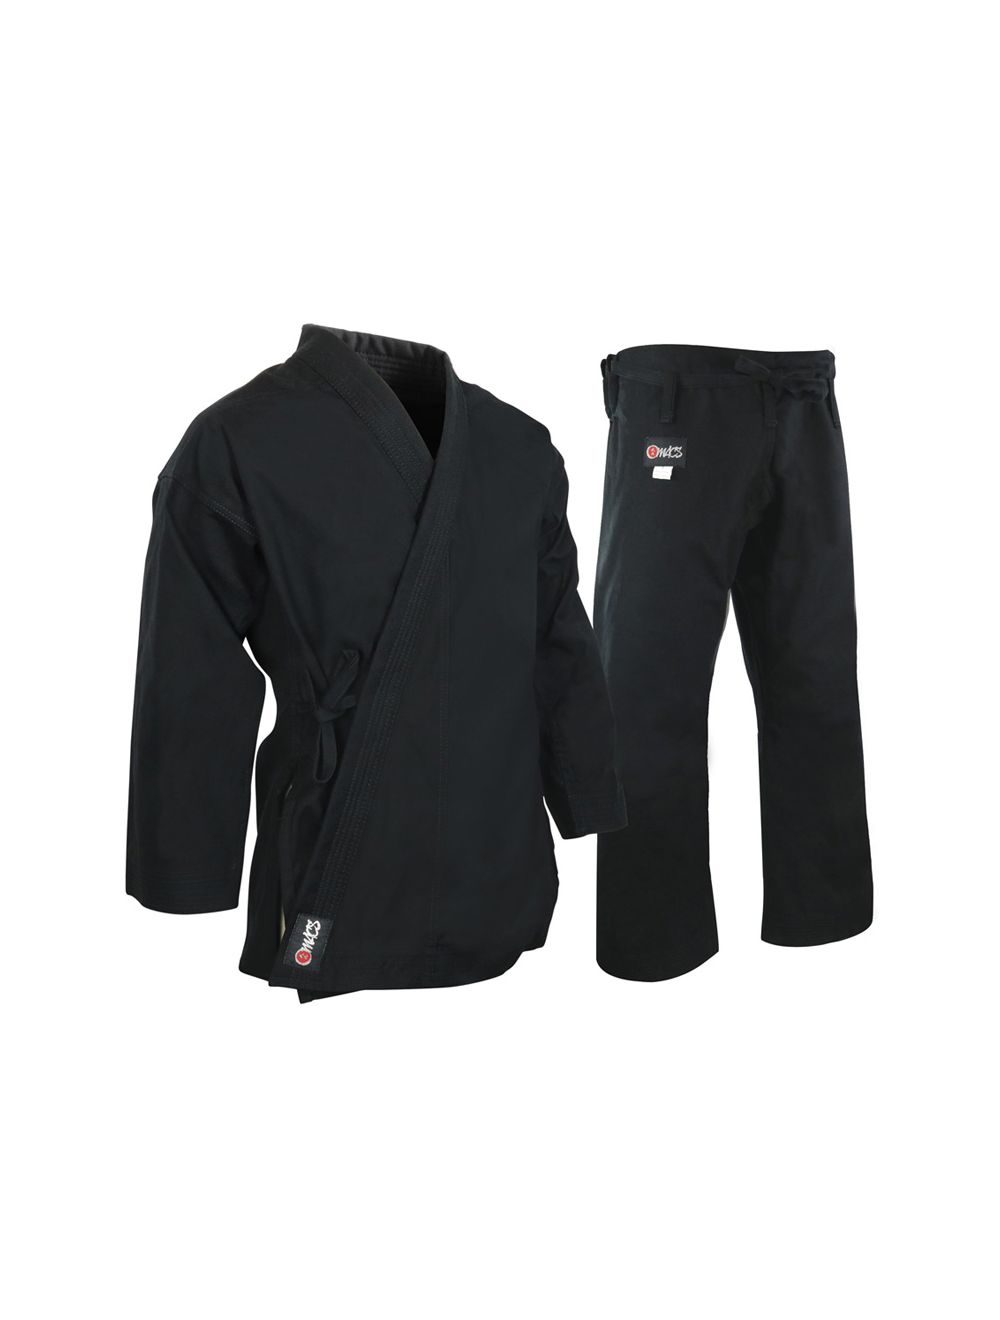 MAR Black Competition Karate Suit/Gi/Uniform 14oz Unisex Polycotton Super Heavy-Weight Canvas Fabric - Master’s choice 